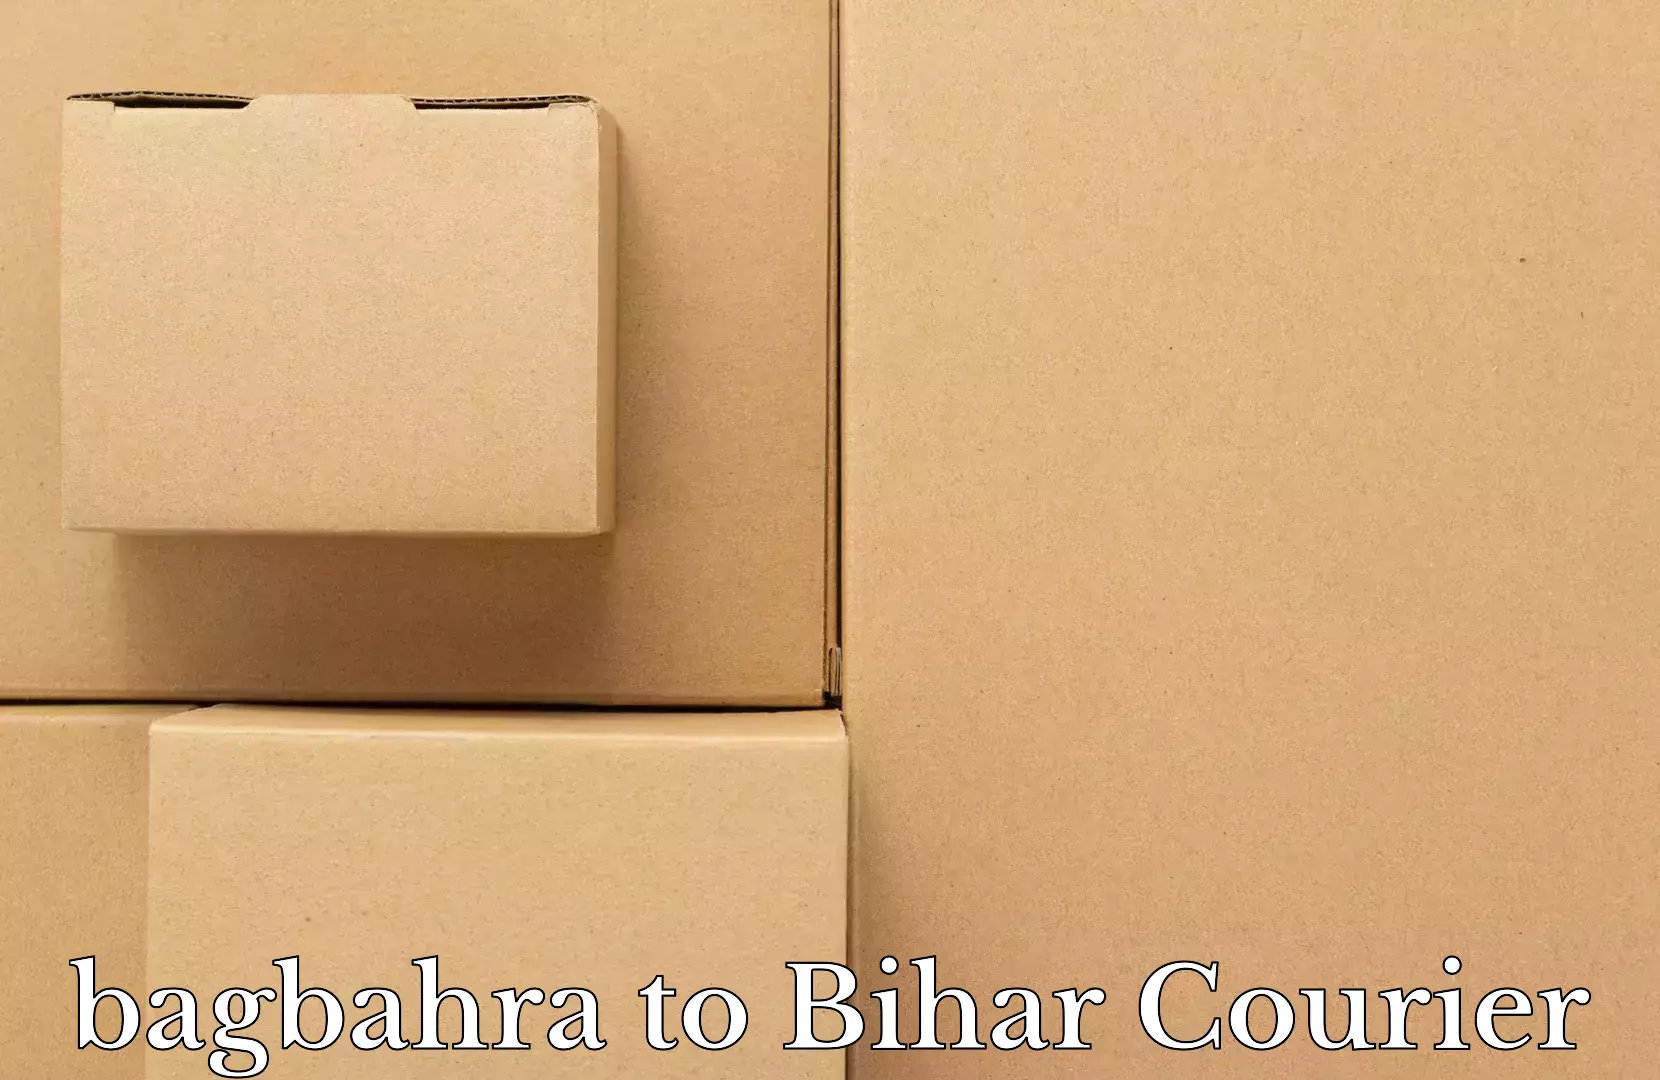 Global baggage shipping in bagbahra to Bikramganj